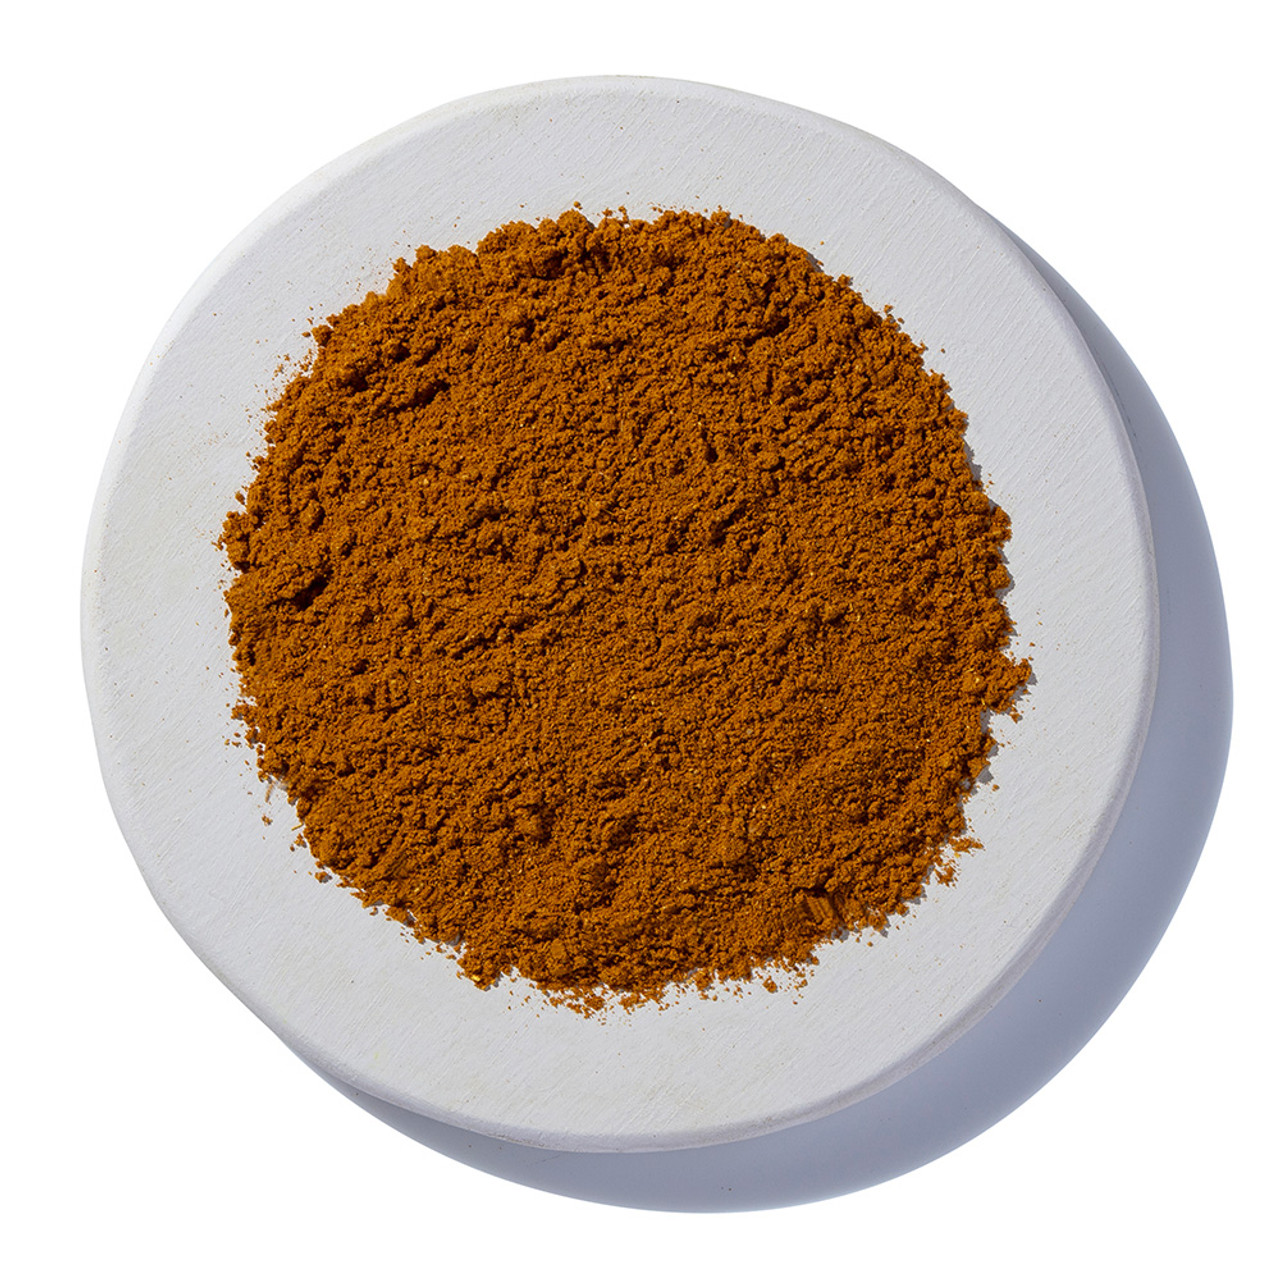 Savory Curry Salt Free Seasoning - Organic